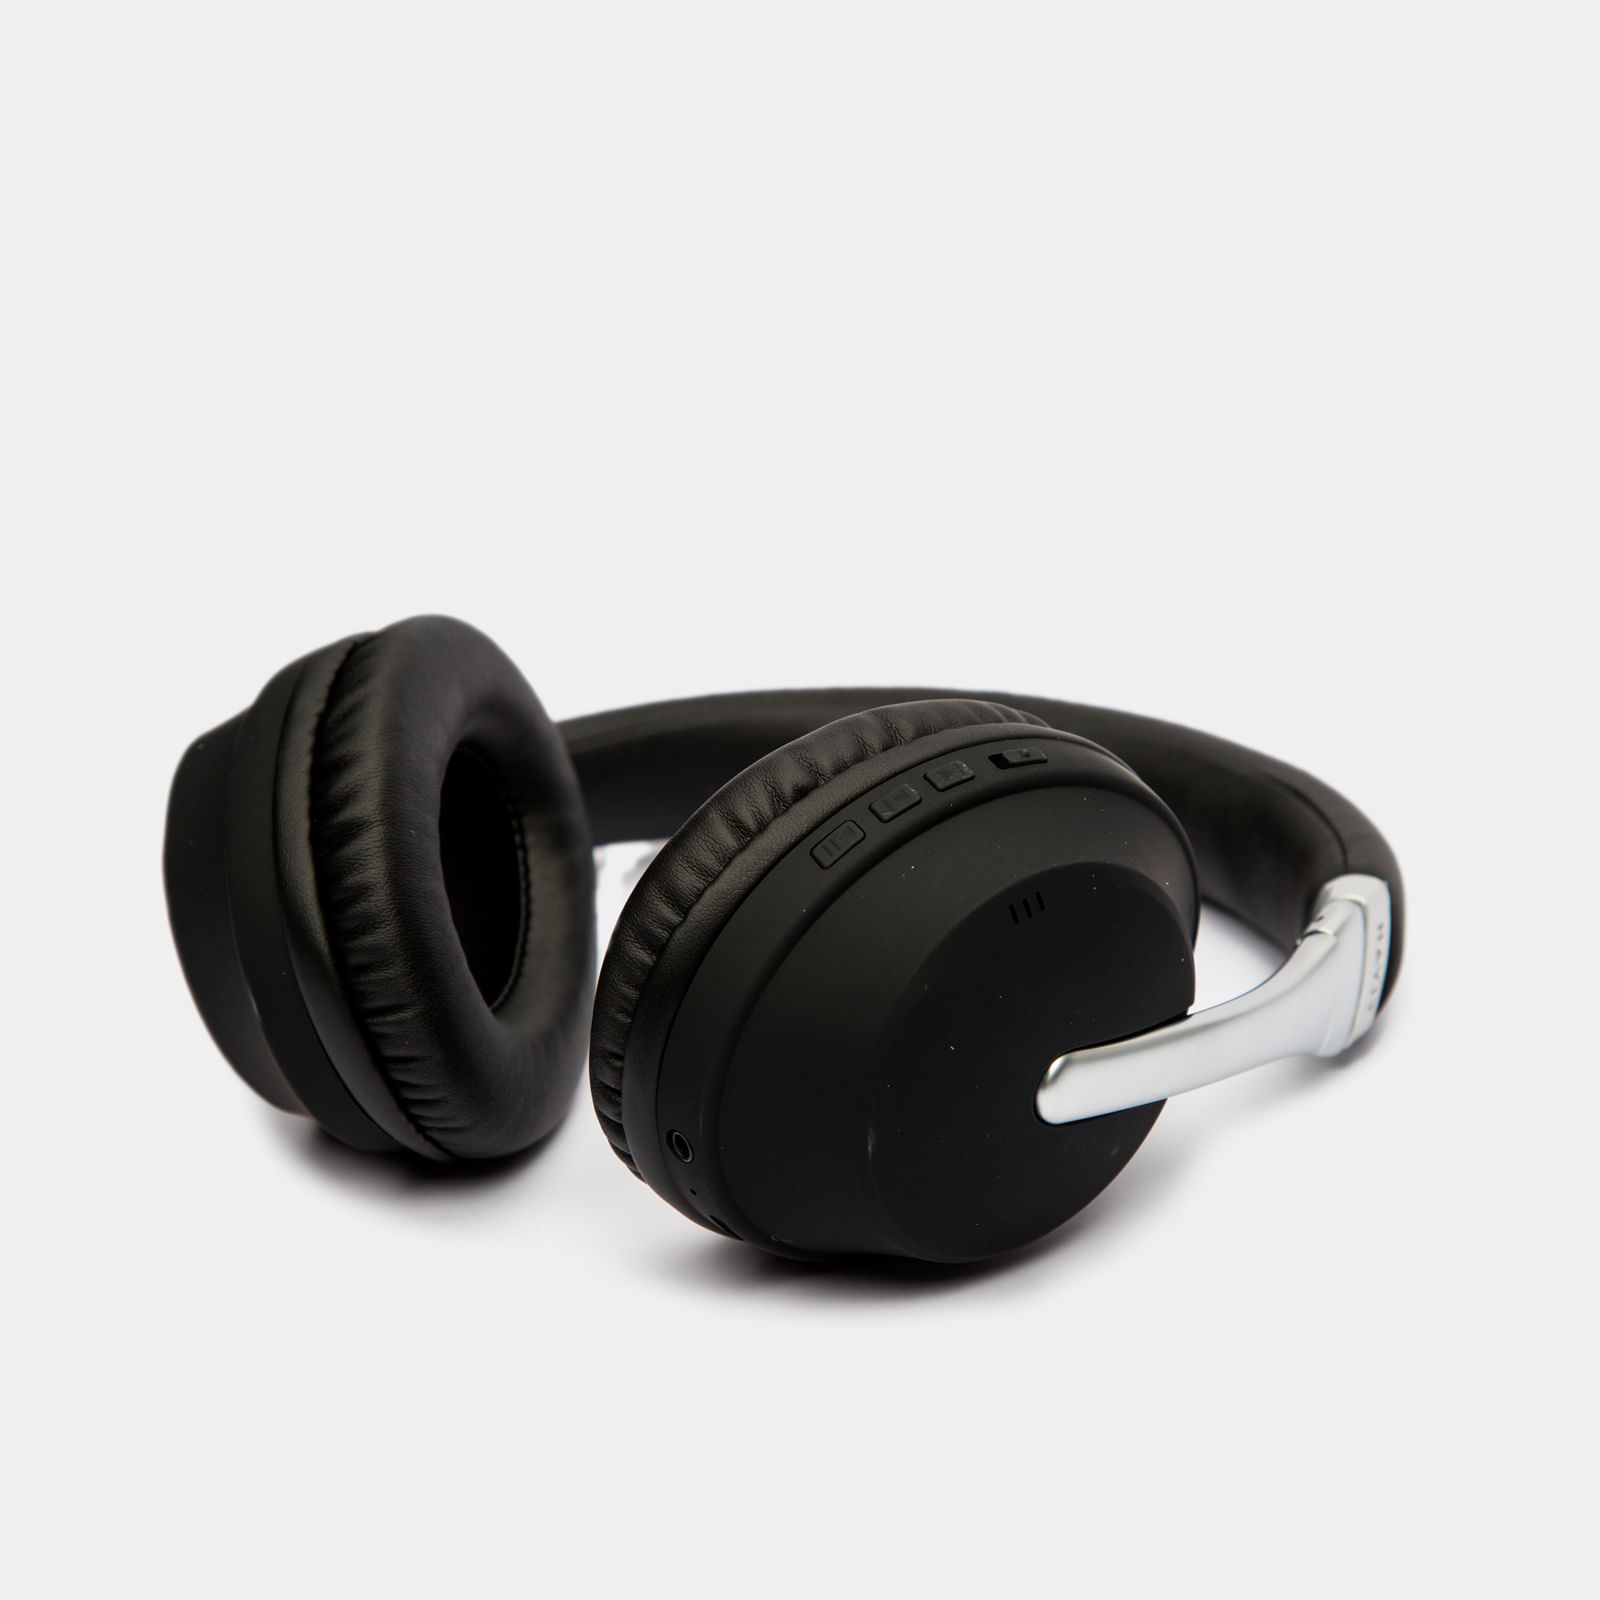 Audífonos diadema Havit de Bluetooth, negros con plateado